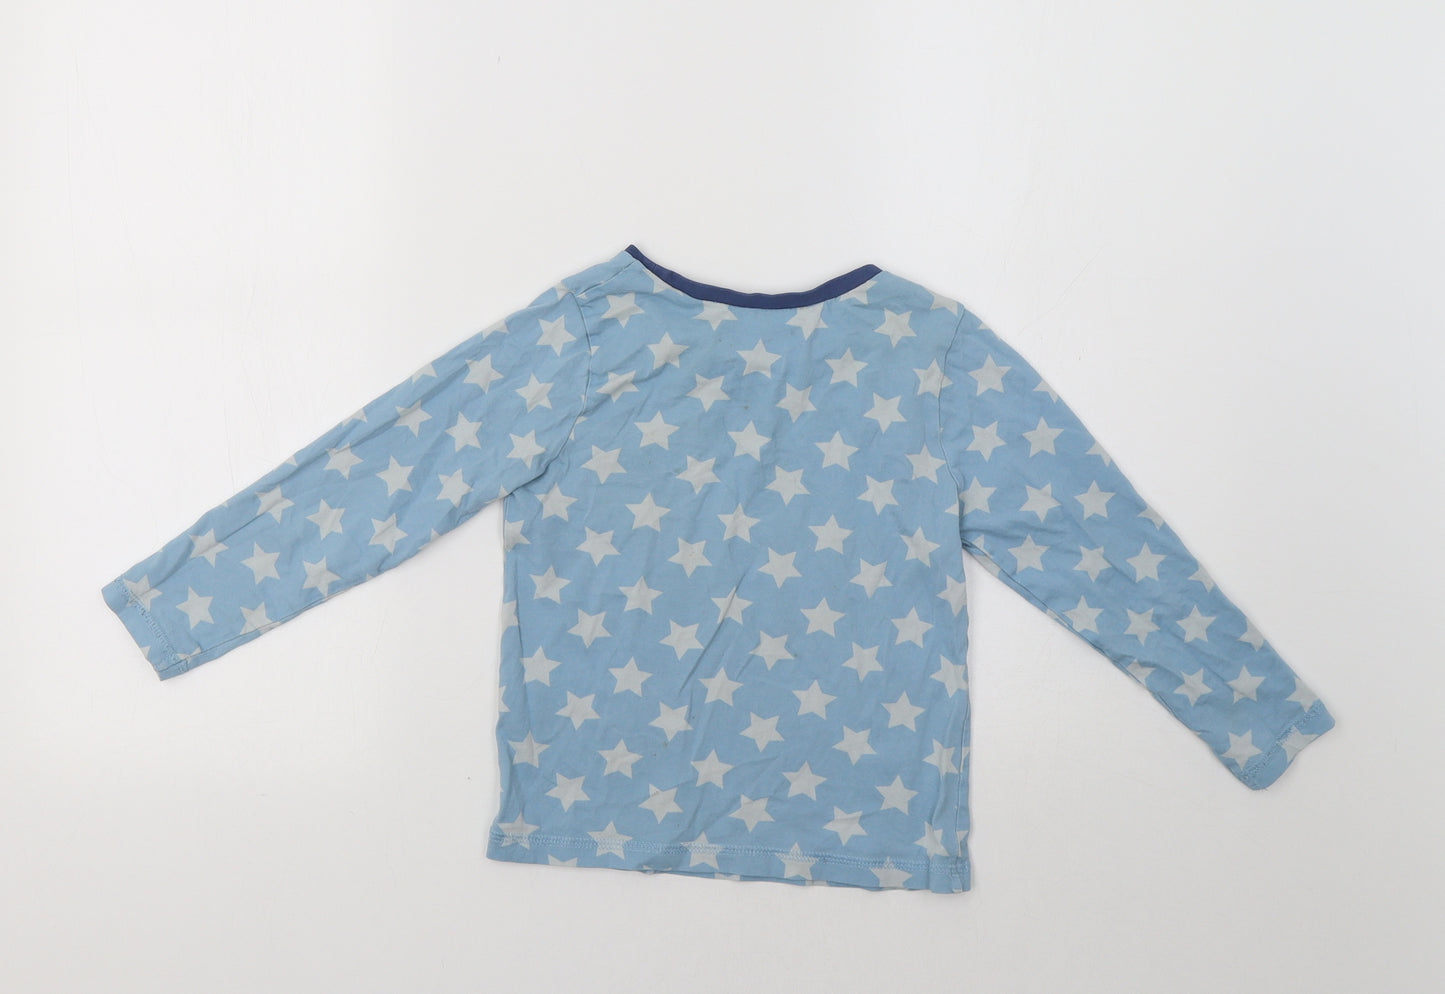 George Boys Blue    Pyjama Top Size 6-7 Years  - Star Print